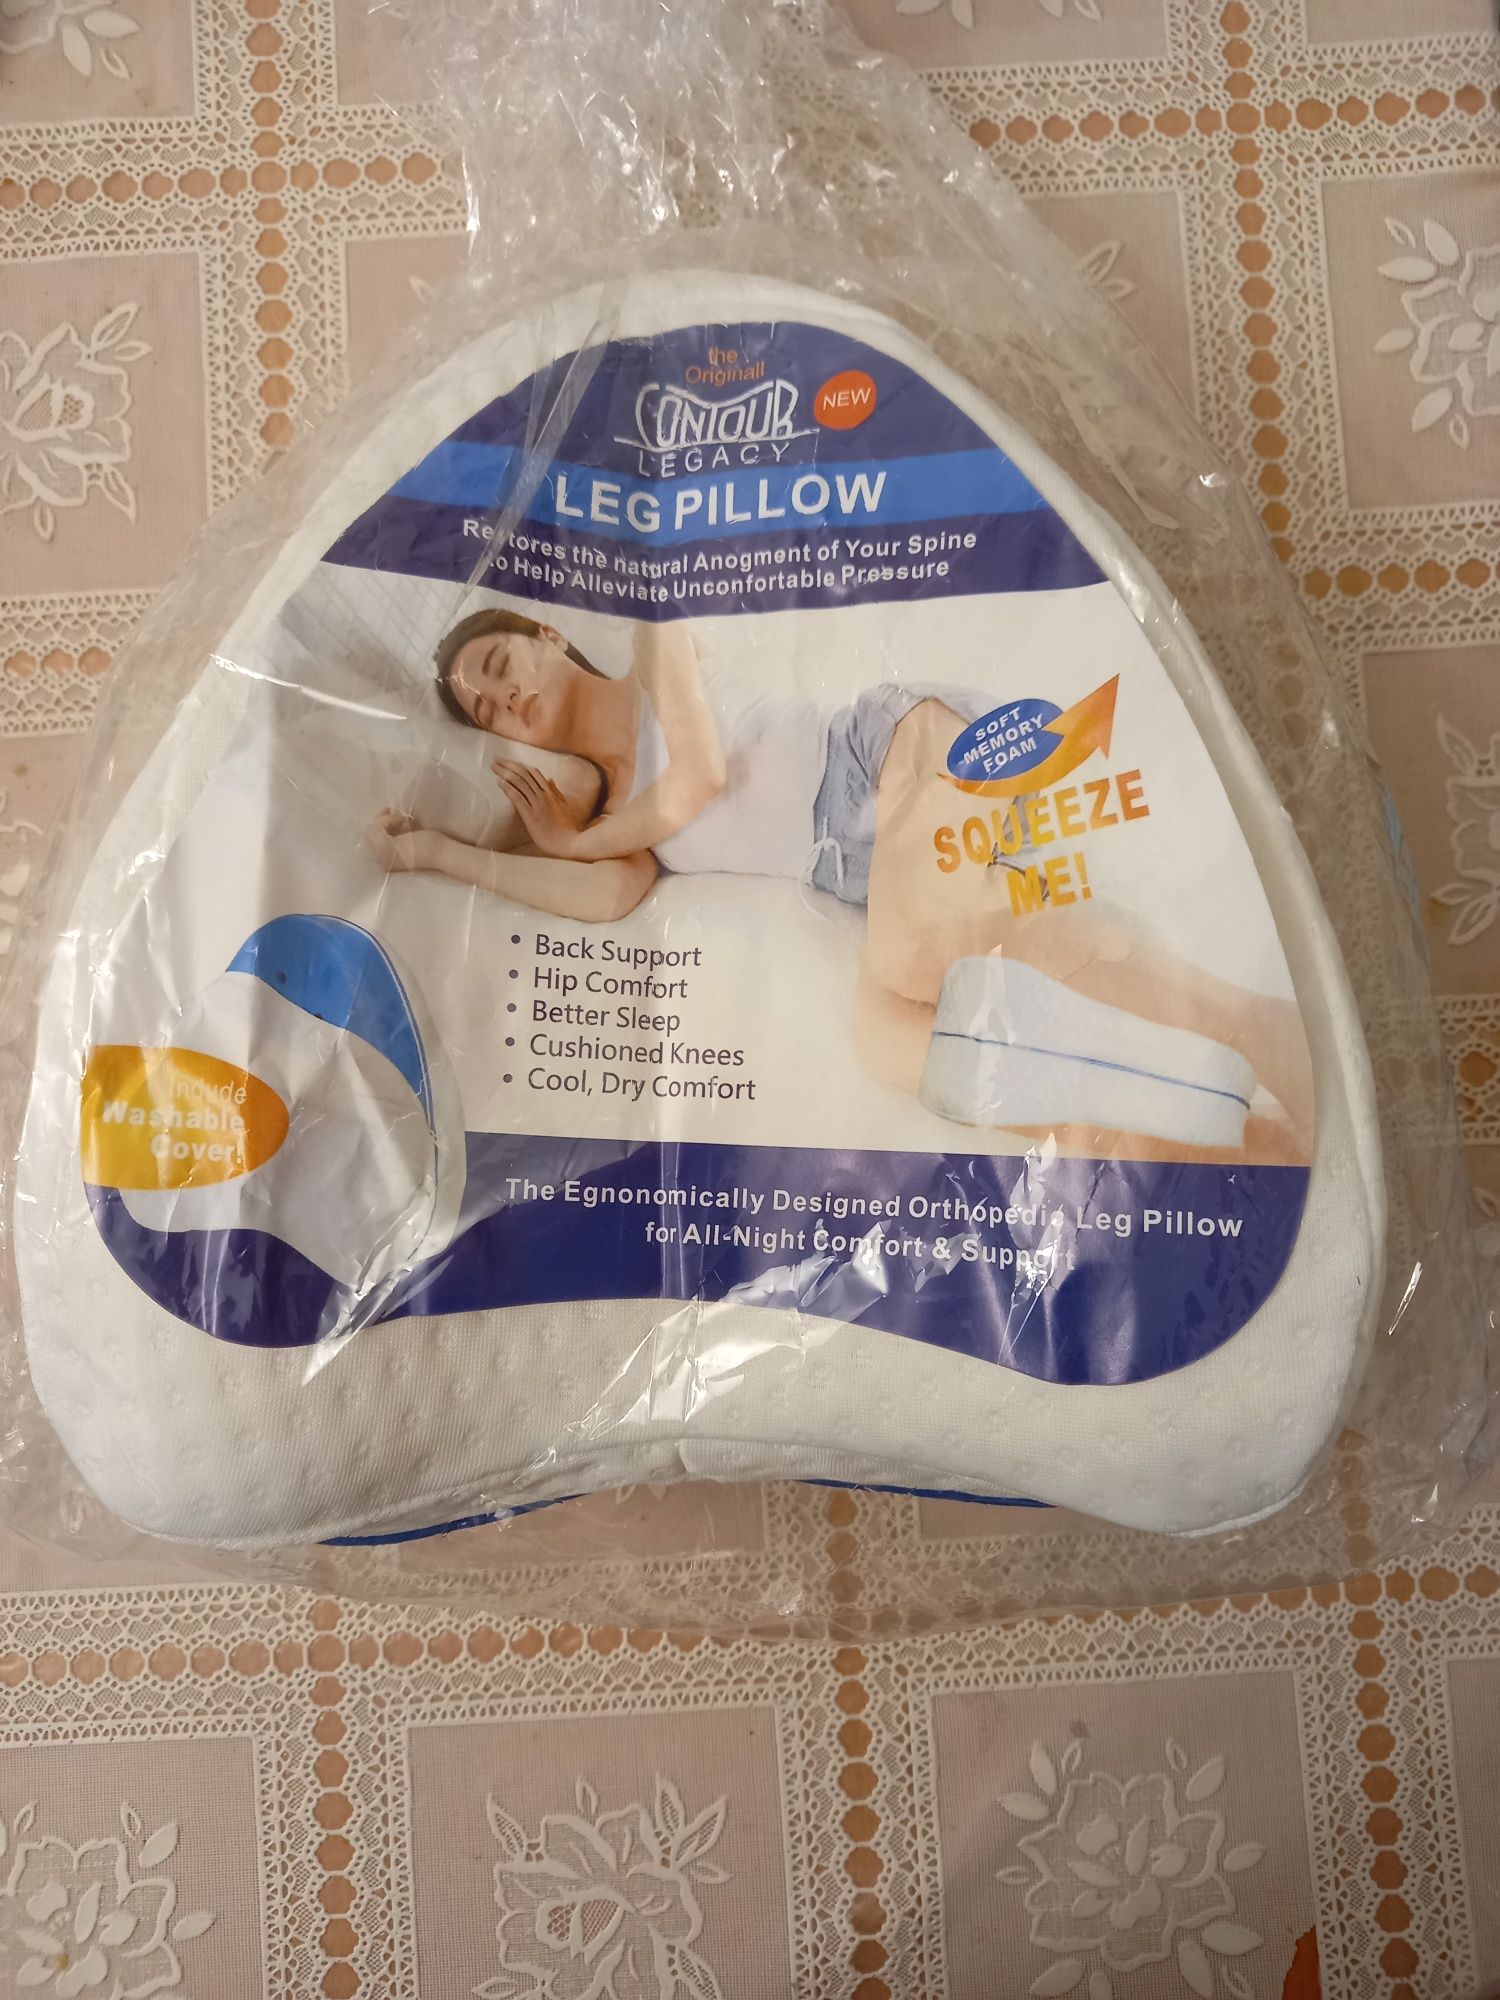 Poduszka Contur Legacy leg pillow